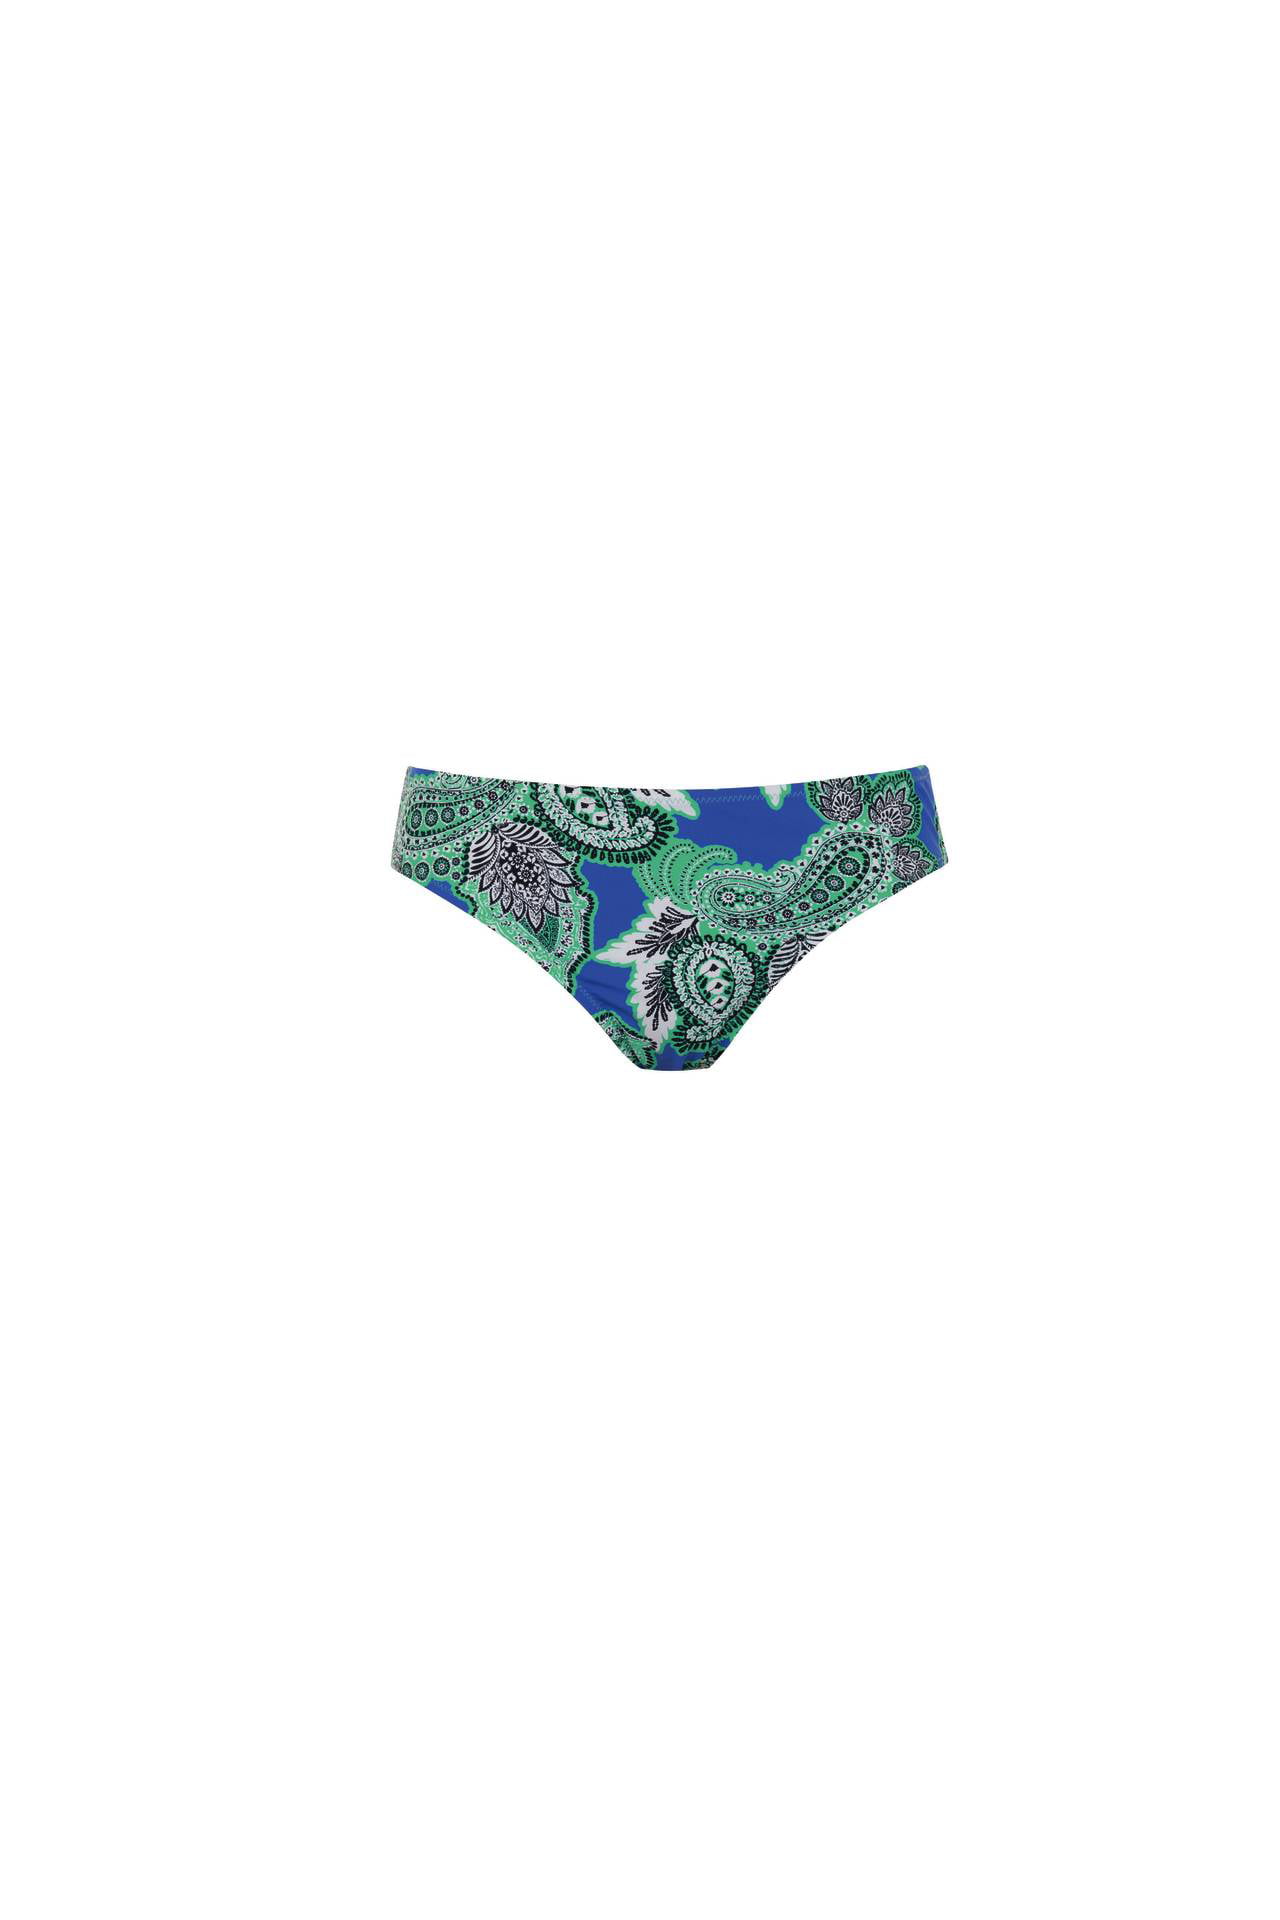 Rosa Faia Womens Casual Bottom Bikini Bottom, 16, Ocean - Walmart.com